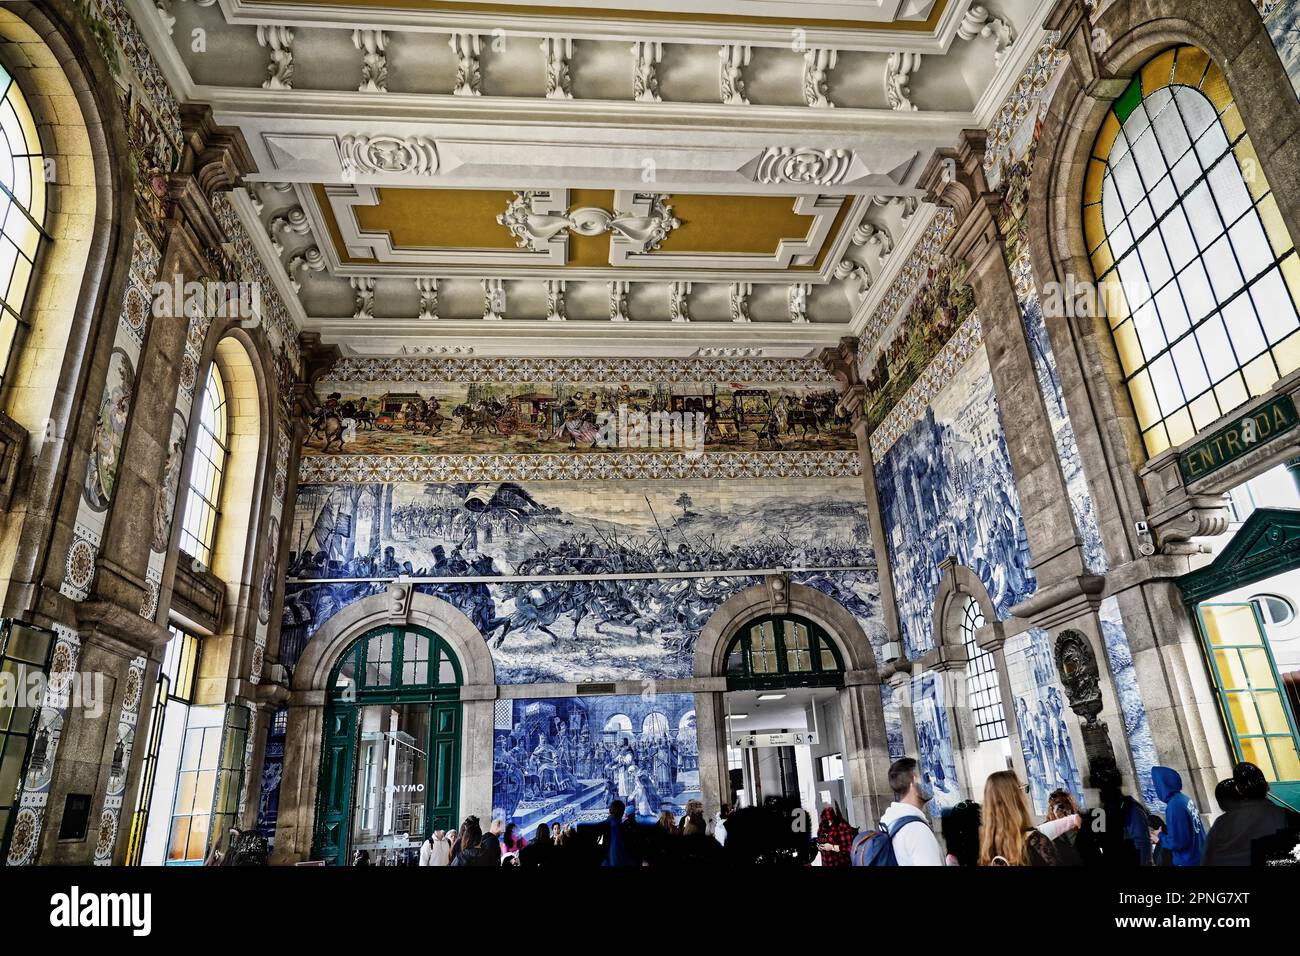 View of azulejos on walls of ornate interior of Arrivals Hall at Sao Bento Railway Station in Porto, Porto, Norte, Portugal Stock Photo